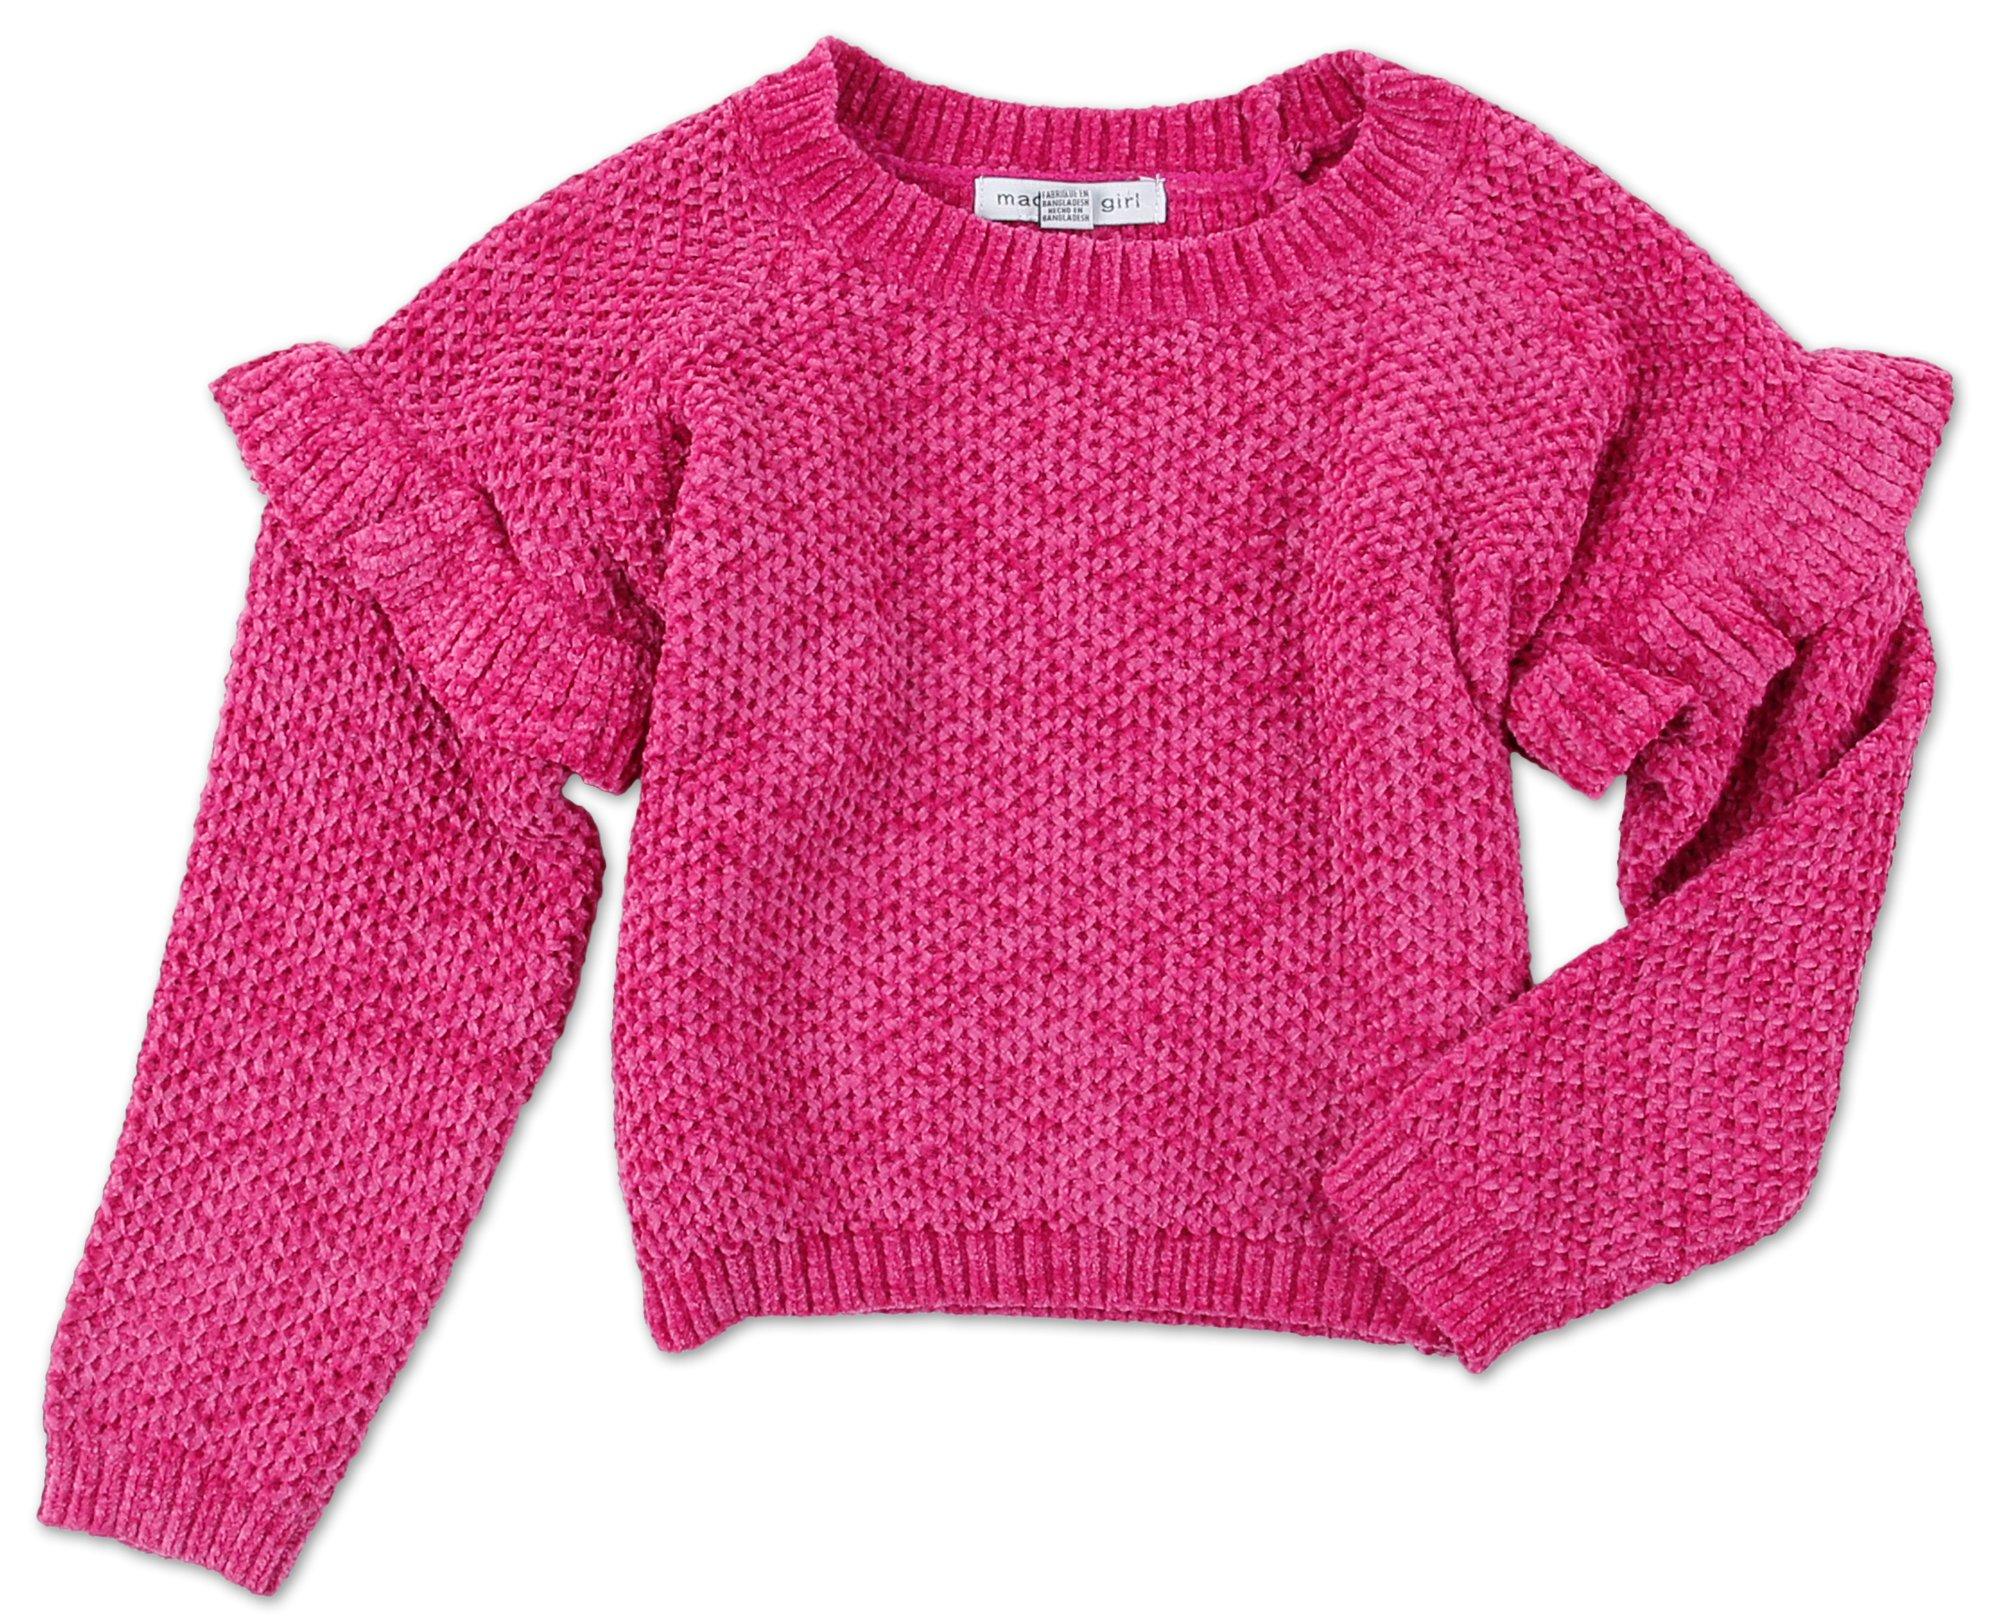 Little Girls Ruffle Sleeve Knit Sweater